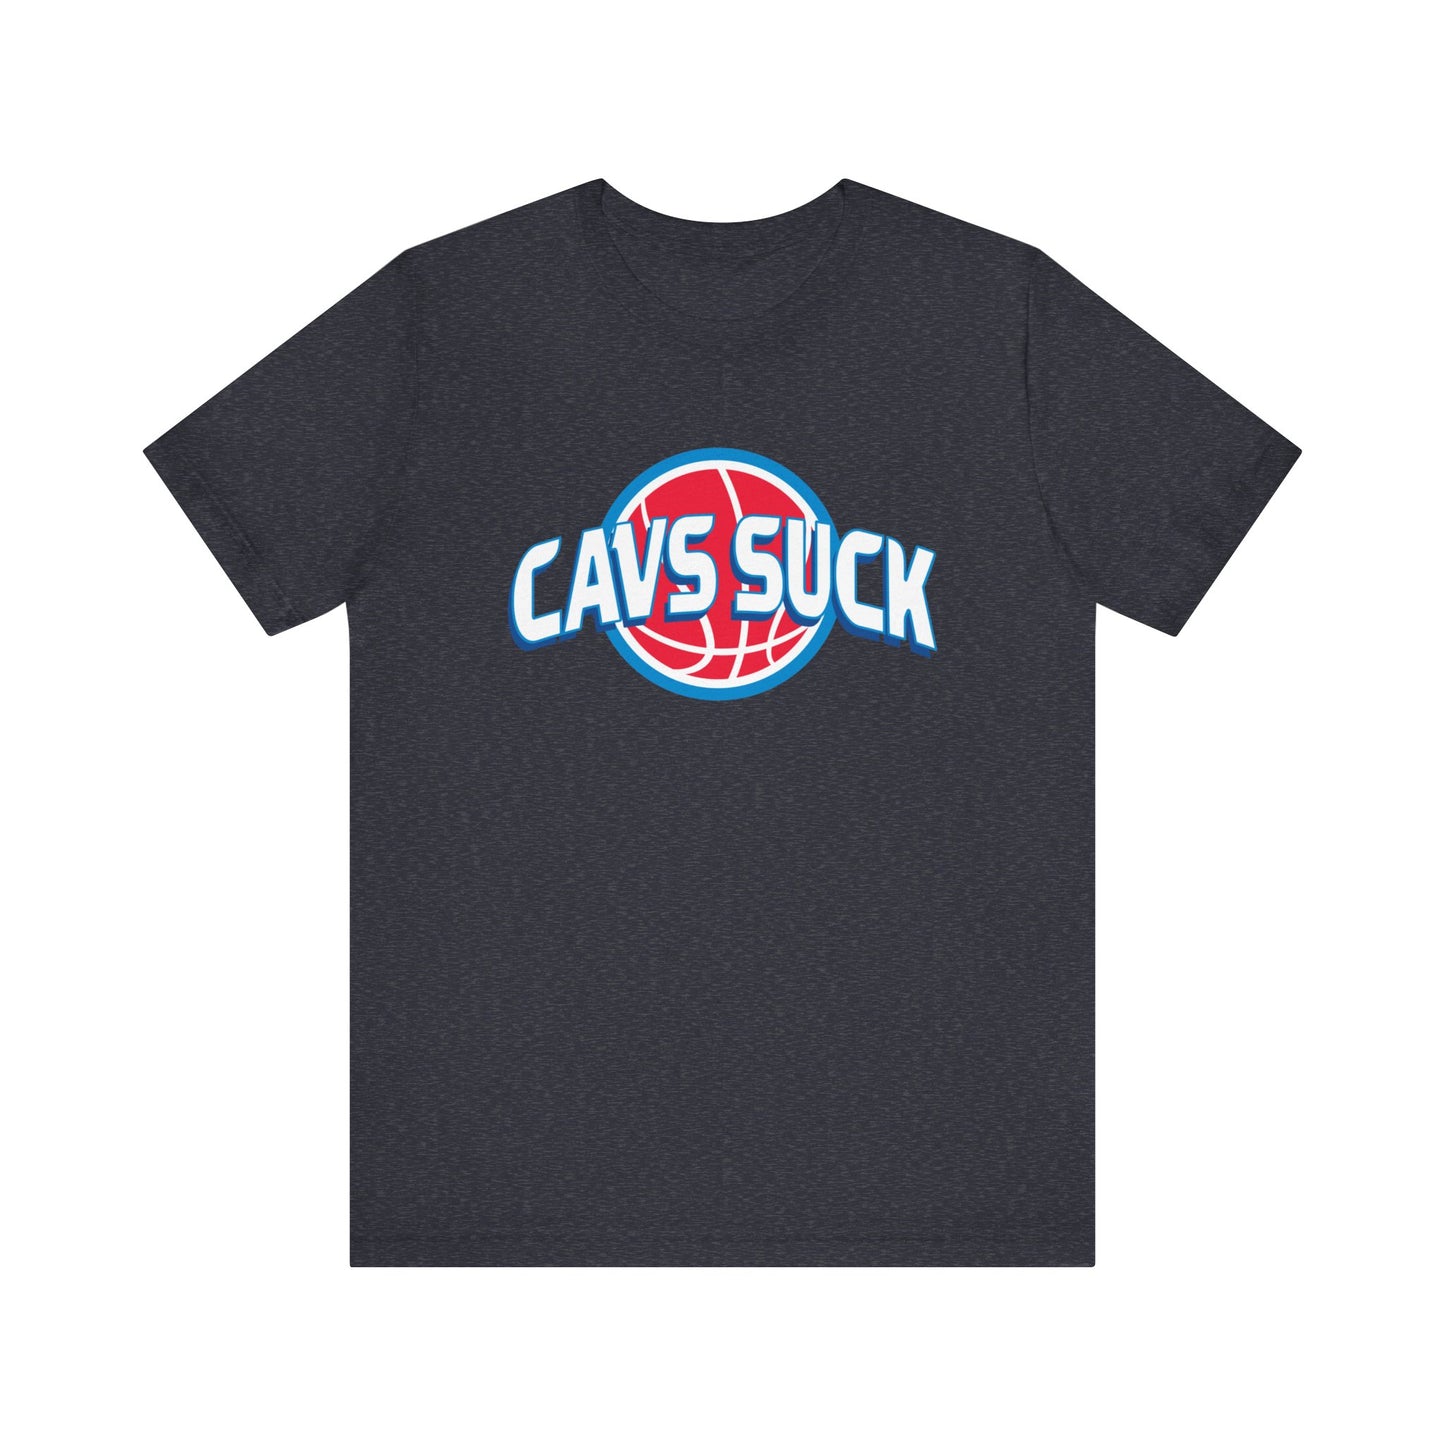 Cavvs Suck (for Detroit fans) - Unisex Jersey Short Sleeve Tee